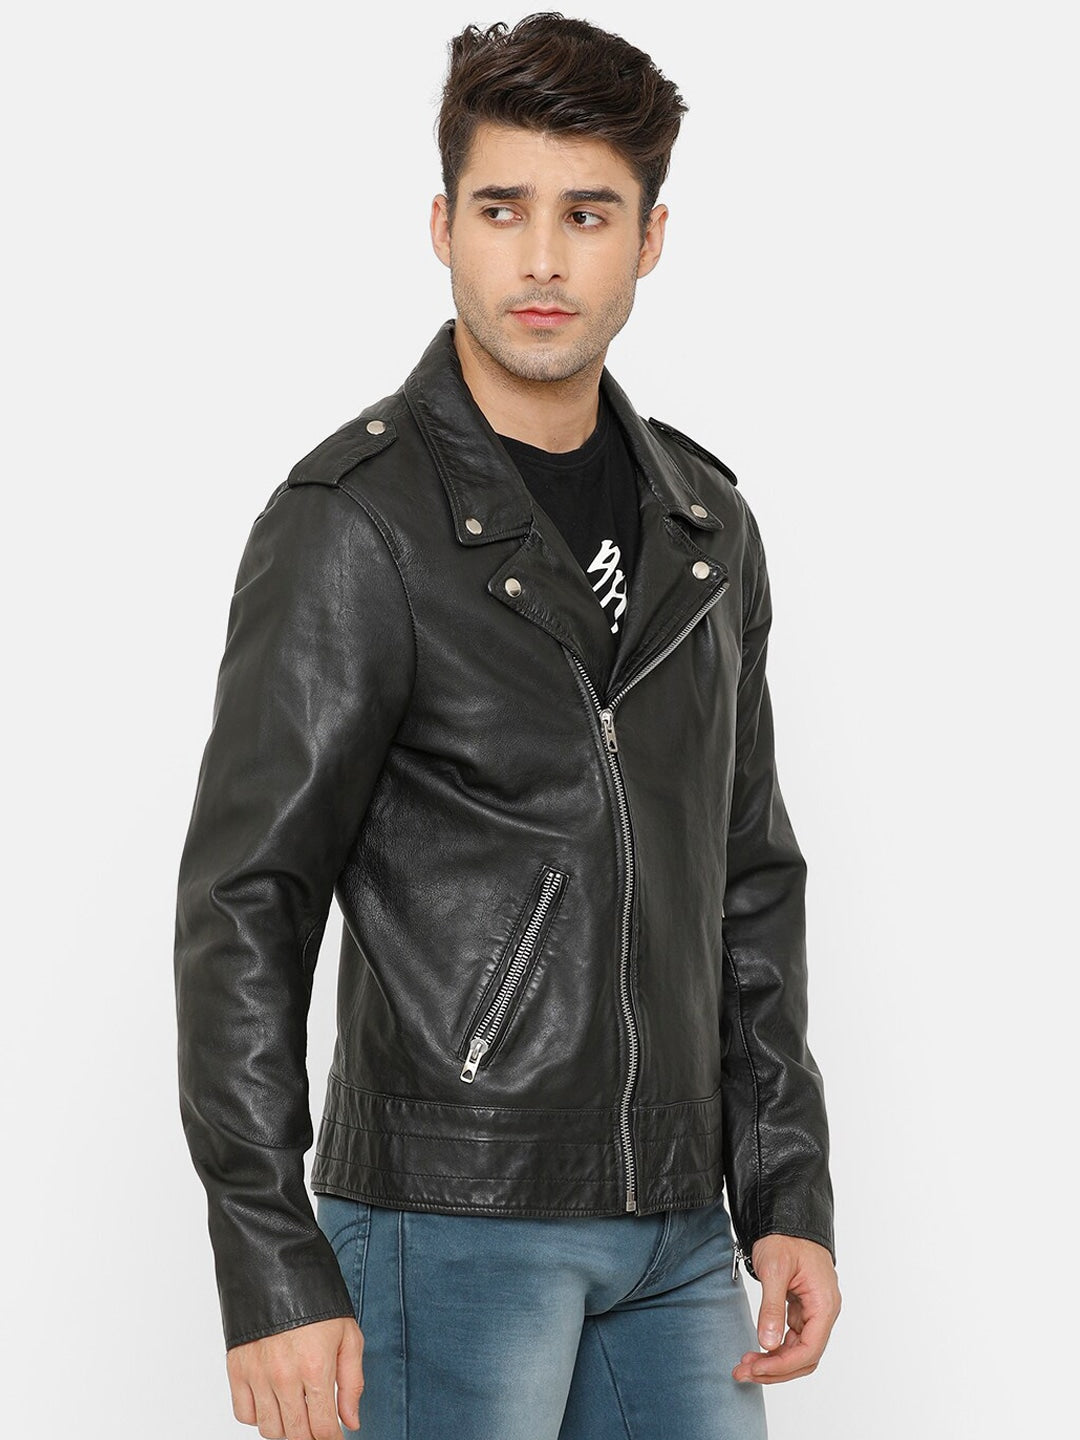 Buy Men Black Leather Jacket | QAWACH